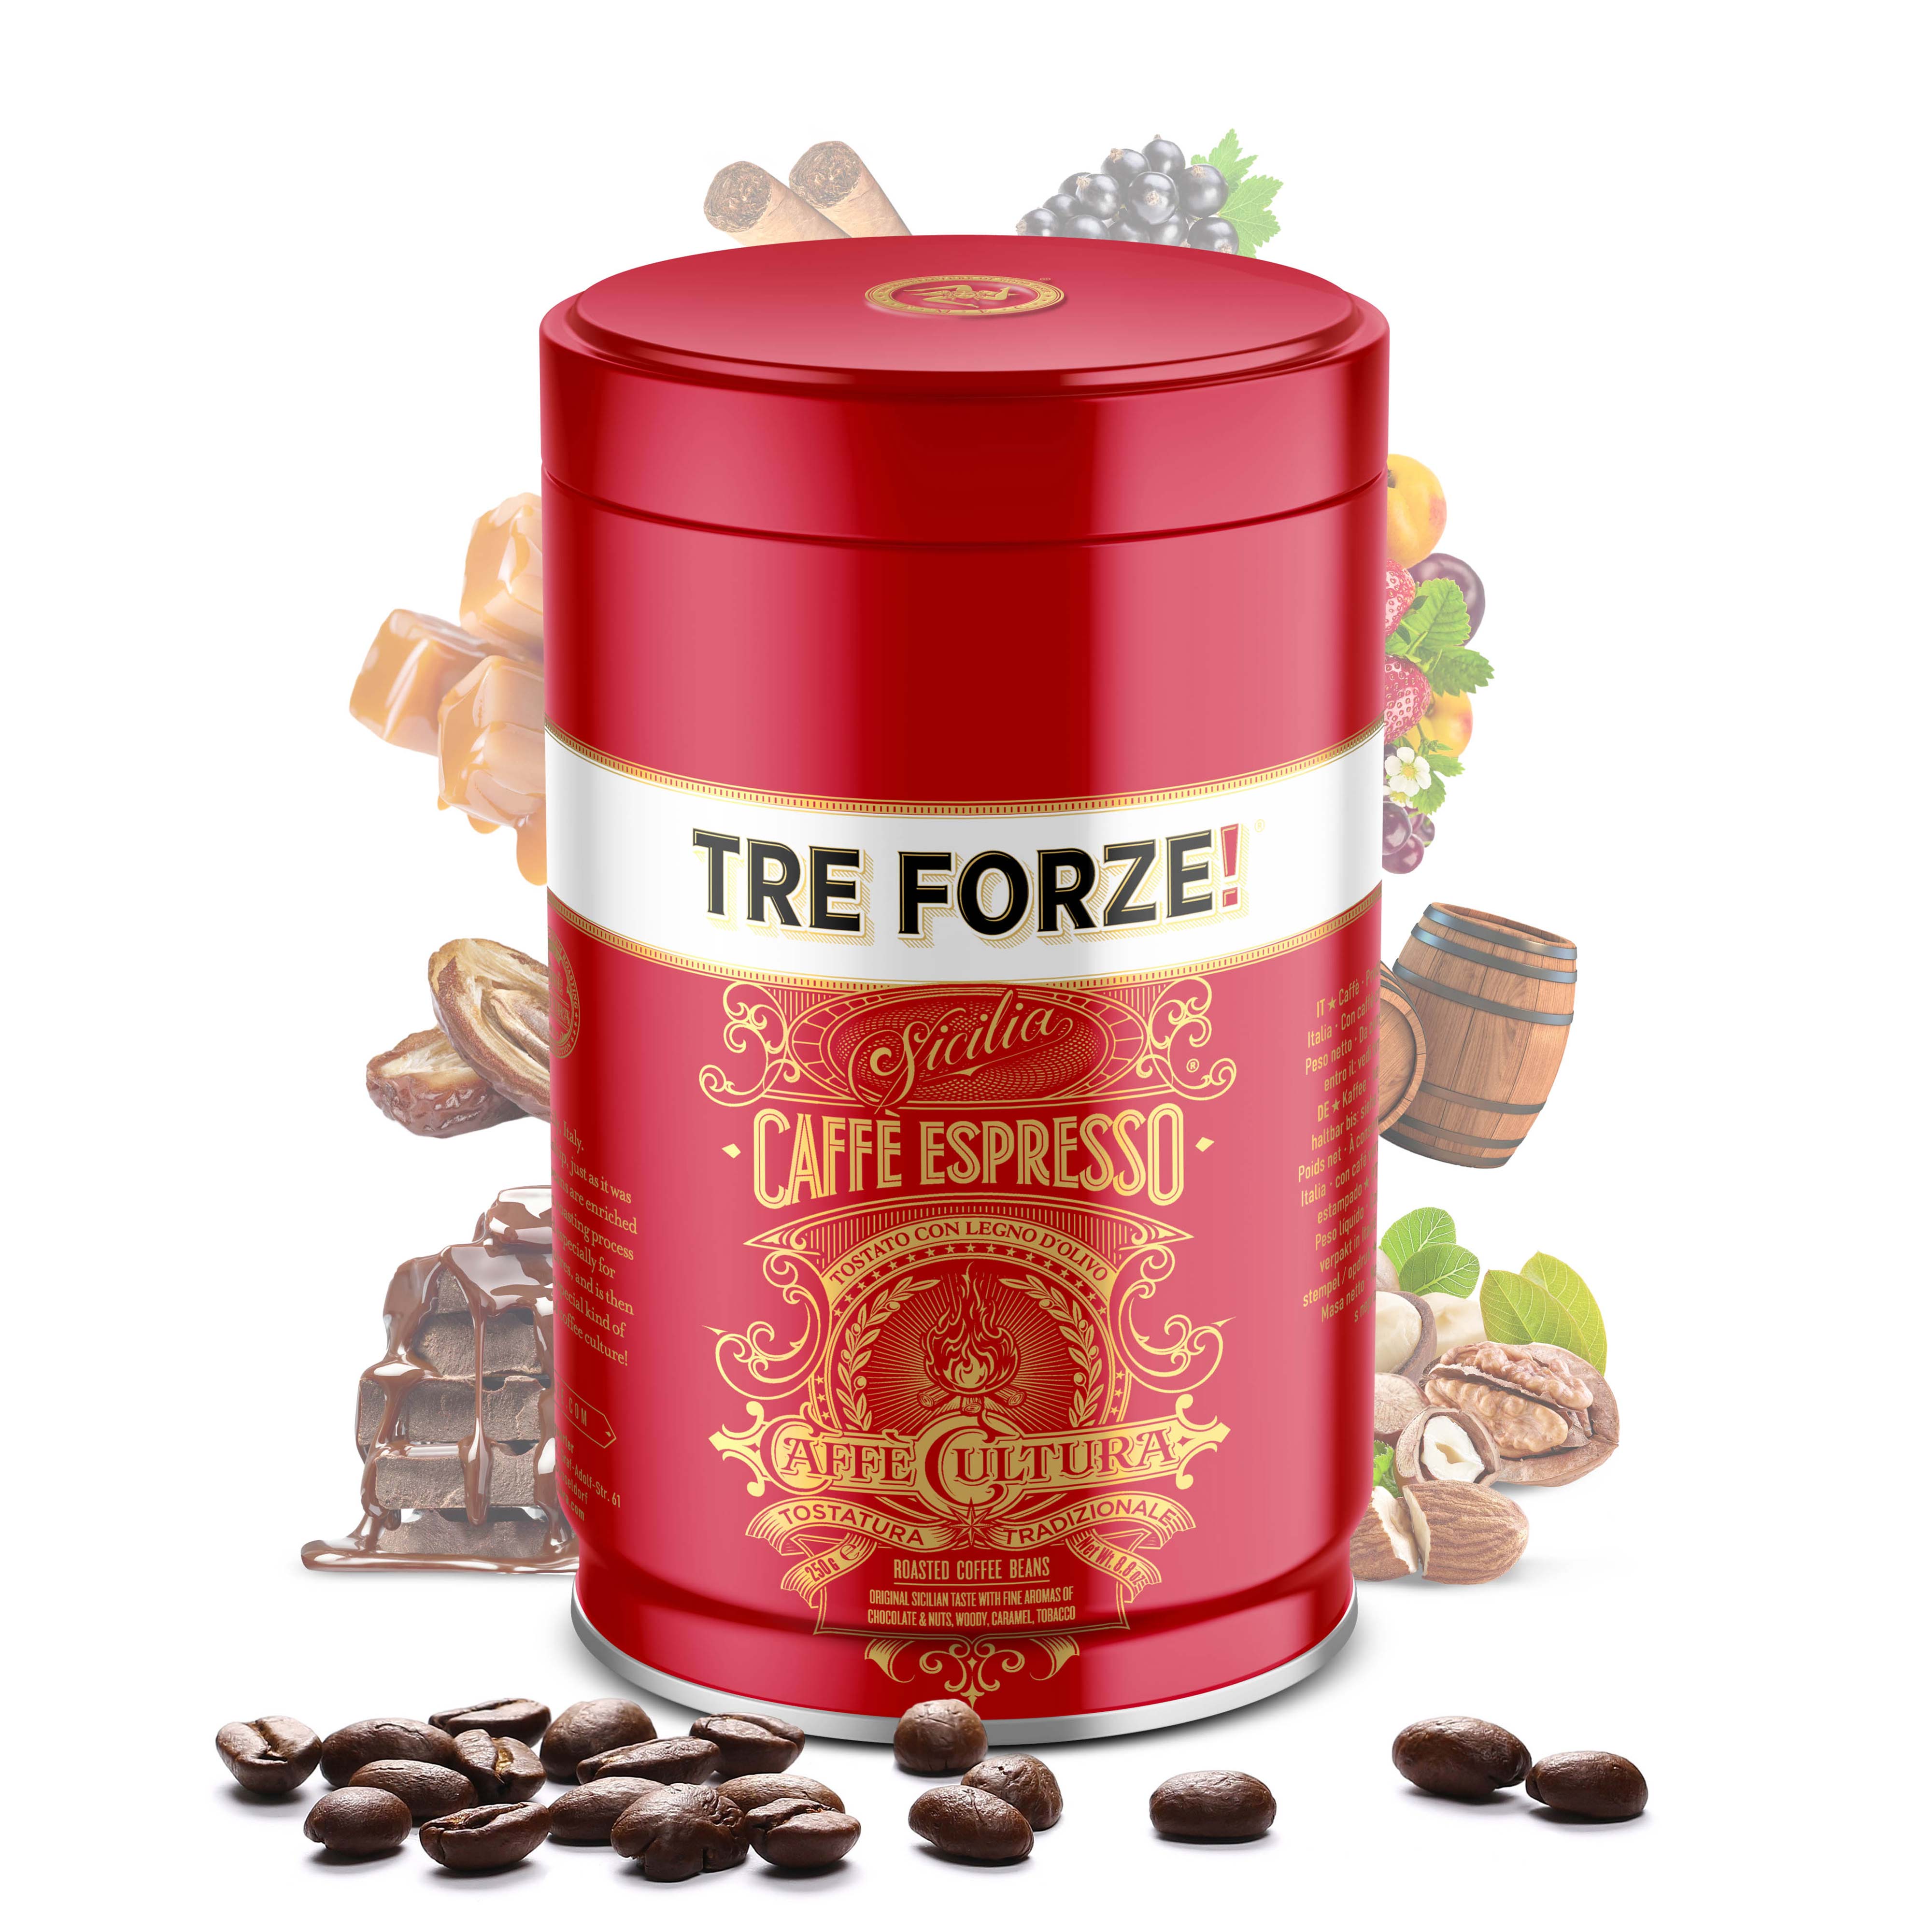 TRE FORZE! - Caffè Espresso - 250g - Beans - Bottle